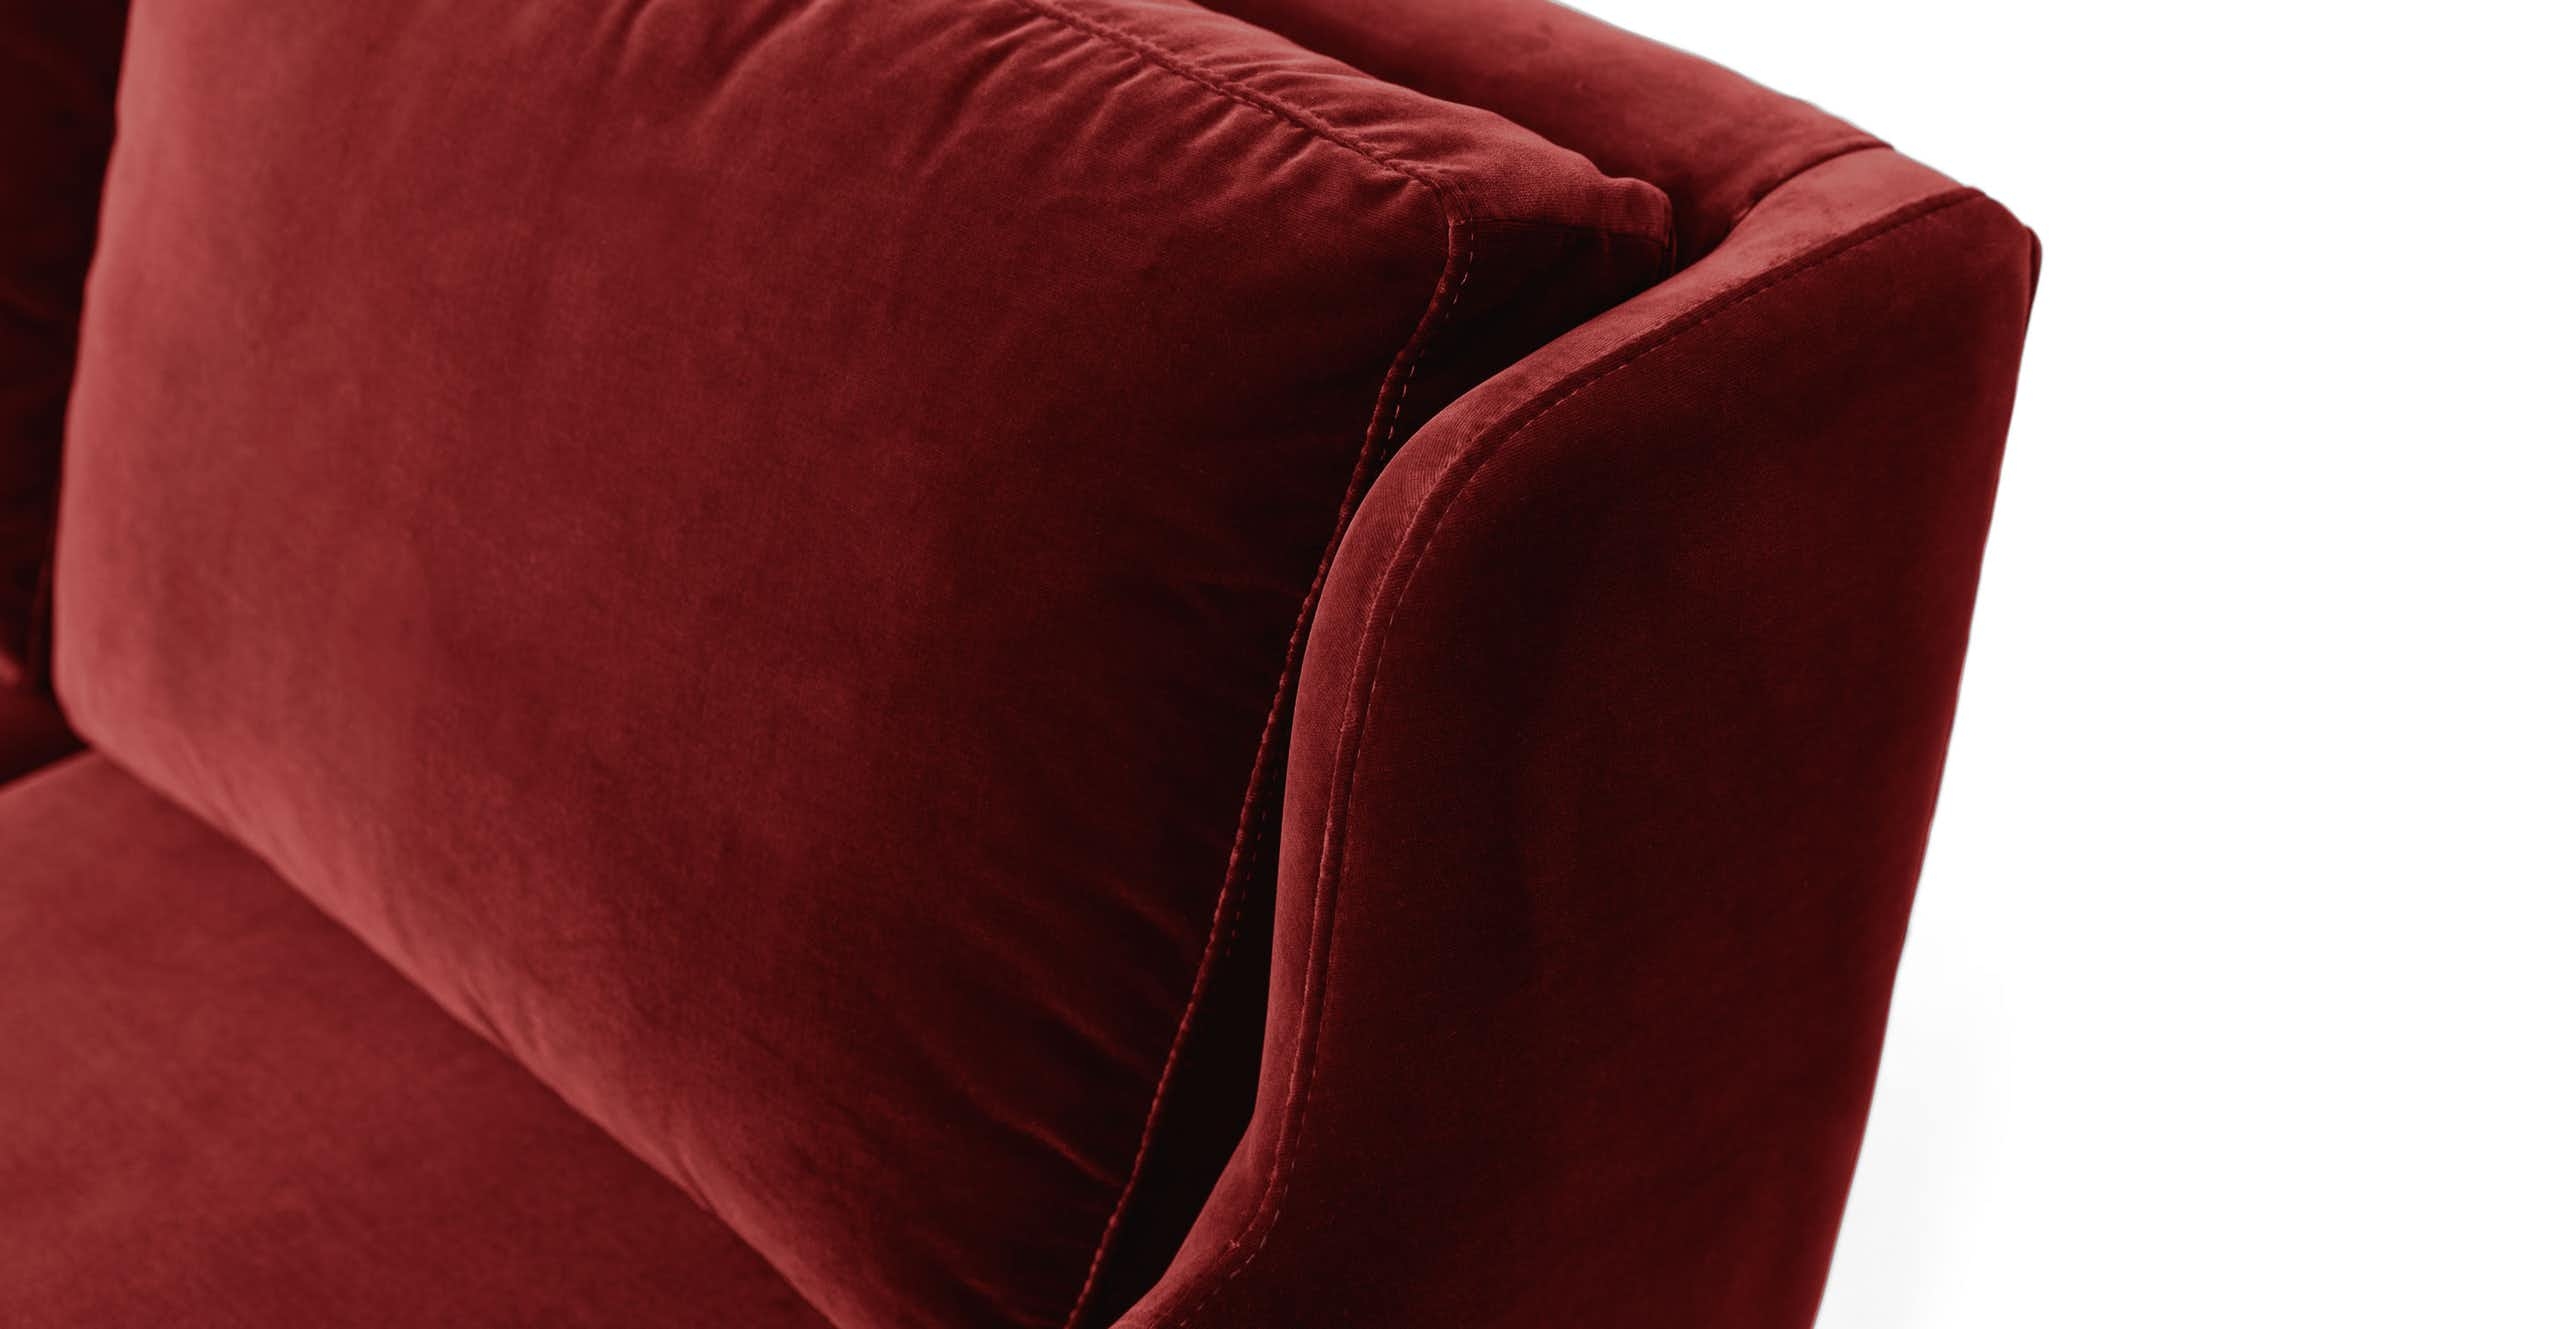 Matrix Claret Red Chair - Image 4